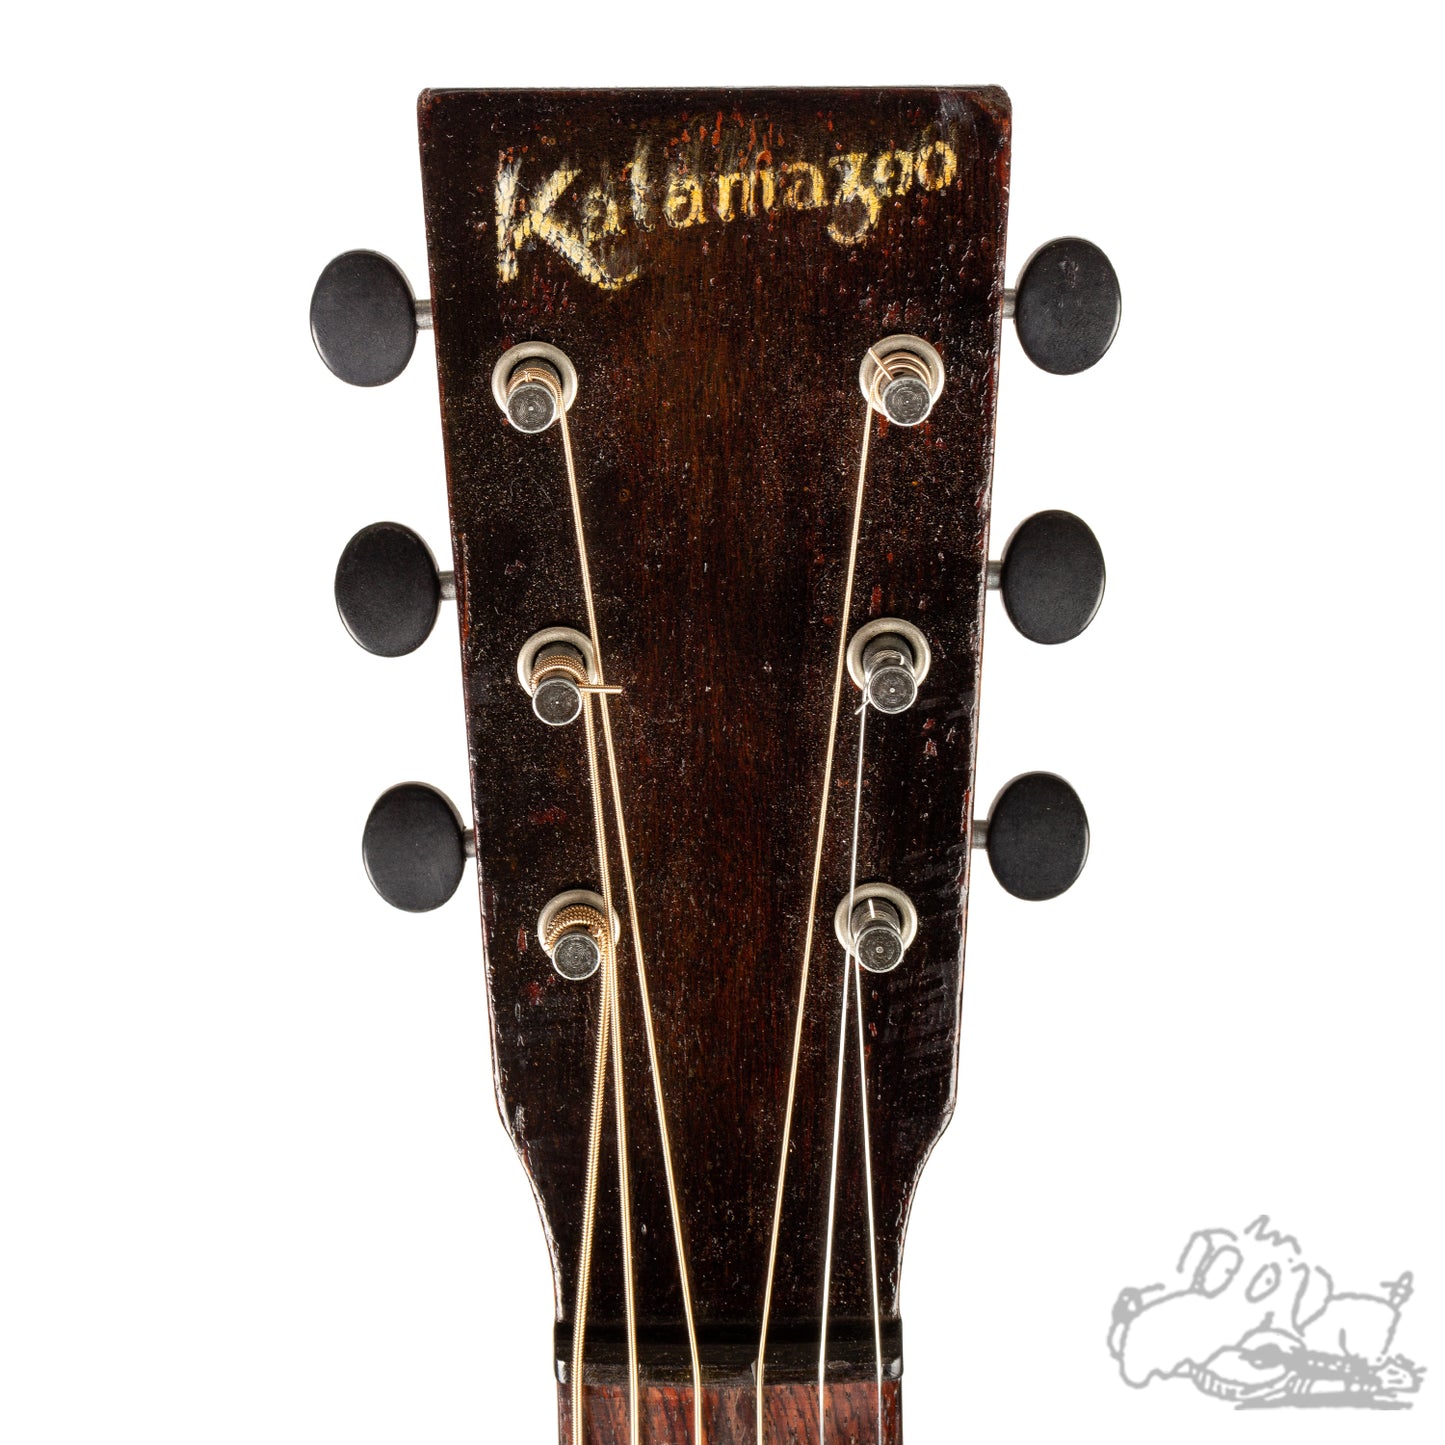 1932 Kalamazoo KG-11